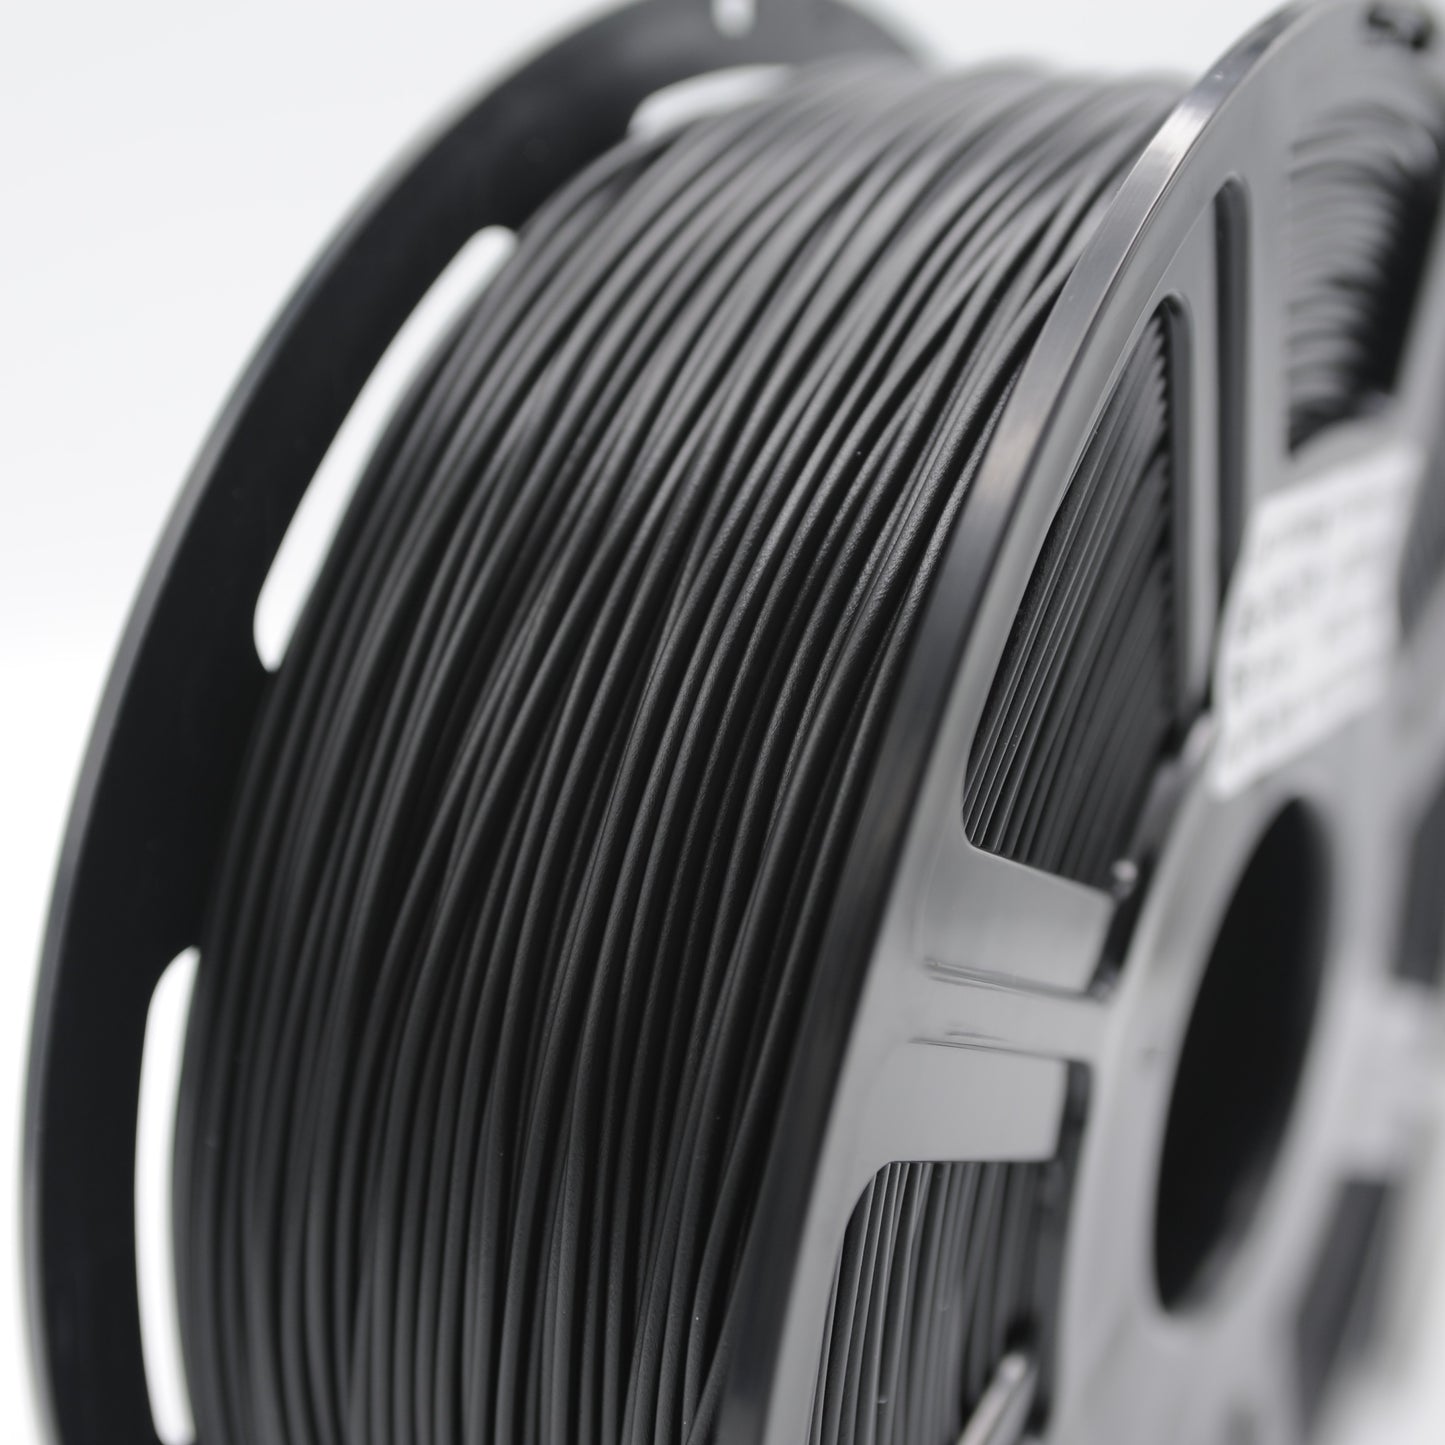 LayerWorks PETG Filament 1.75mm